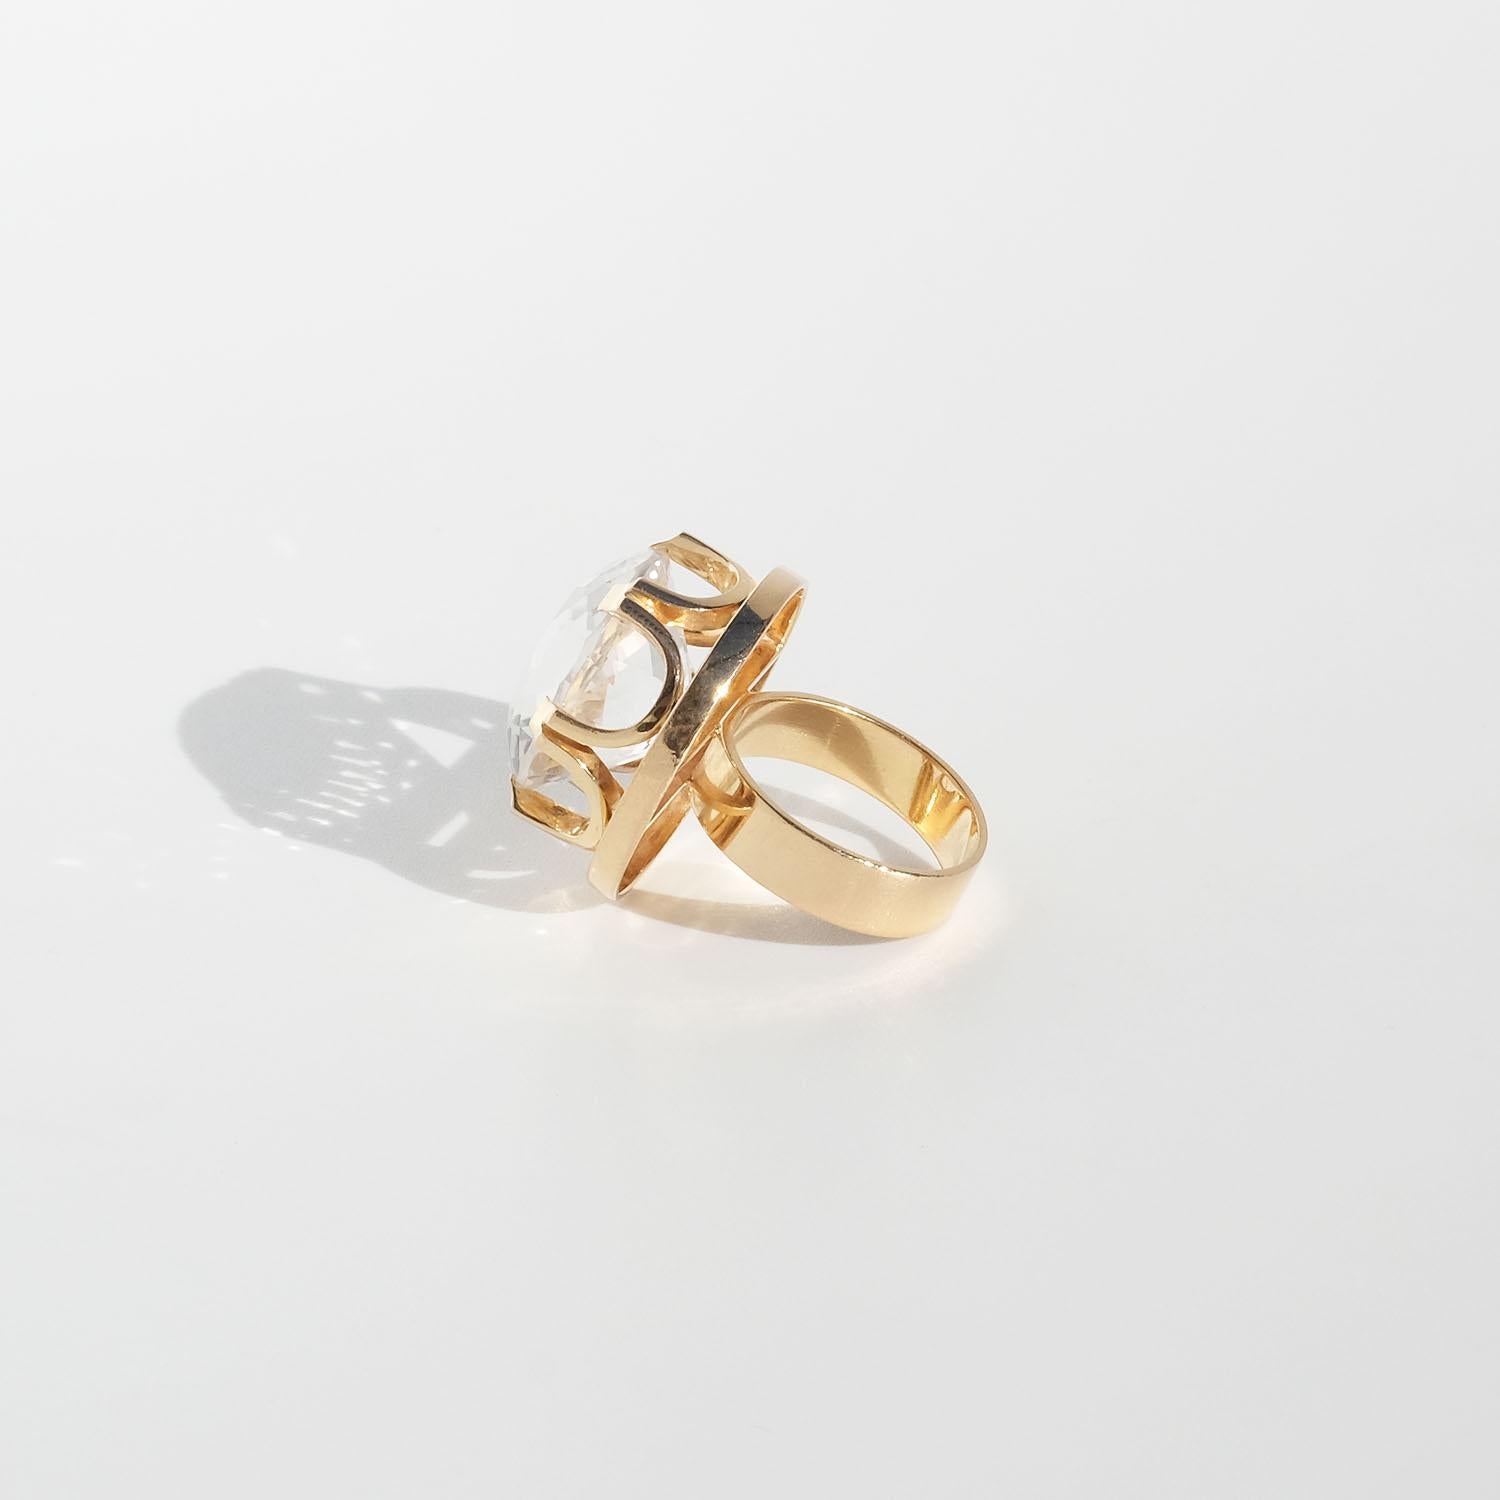 Vintage 18k Gold and Rock Crystal Ring by Finnish Master Kaunis Koru For Sale 1